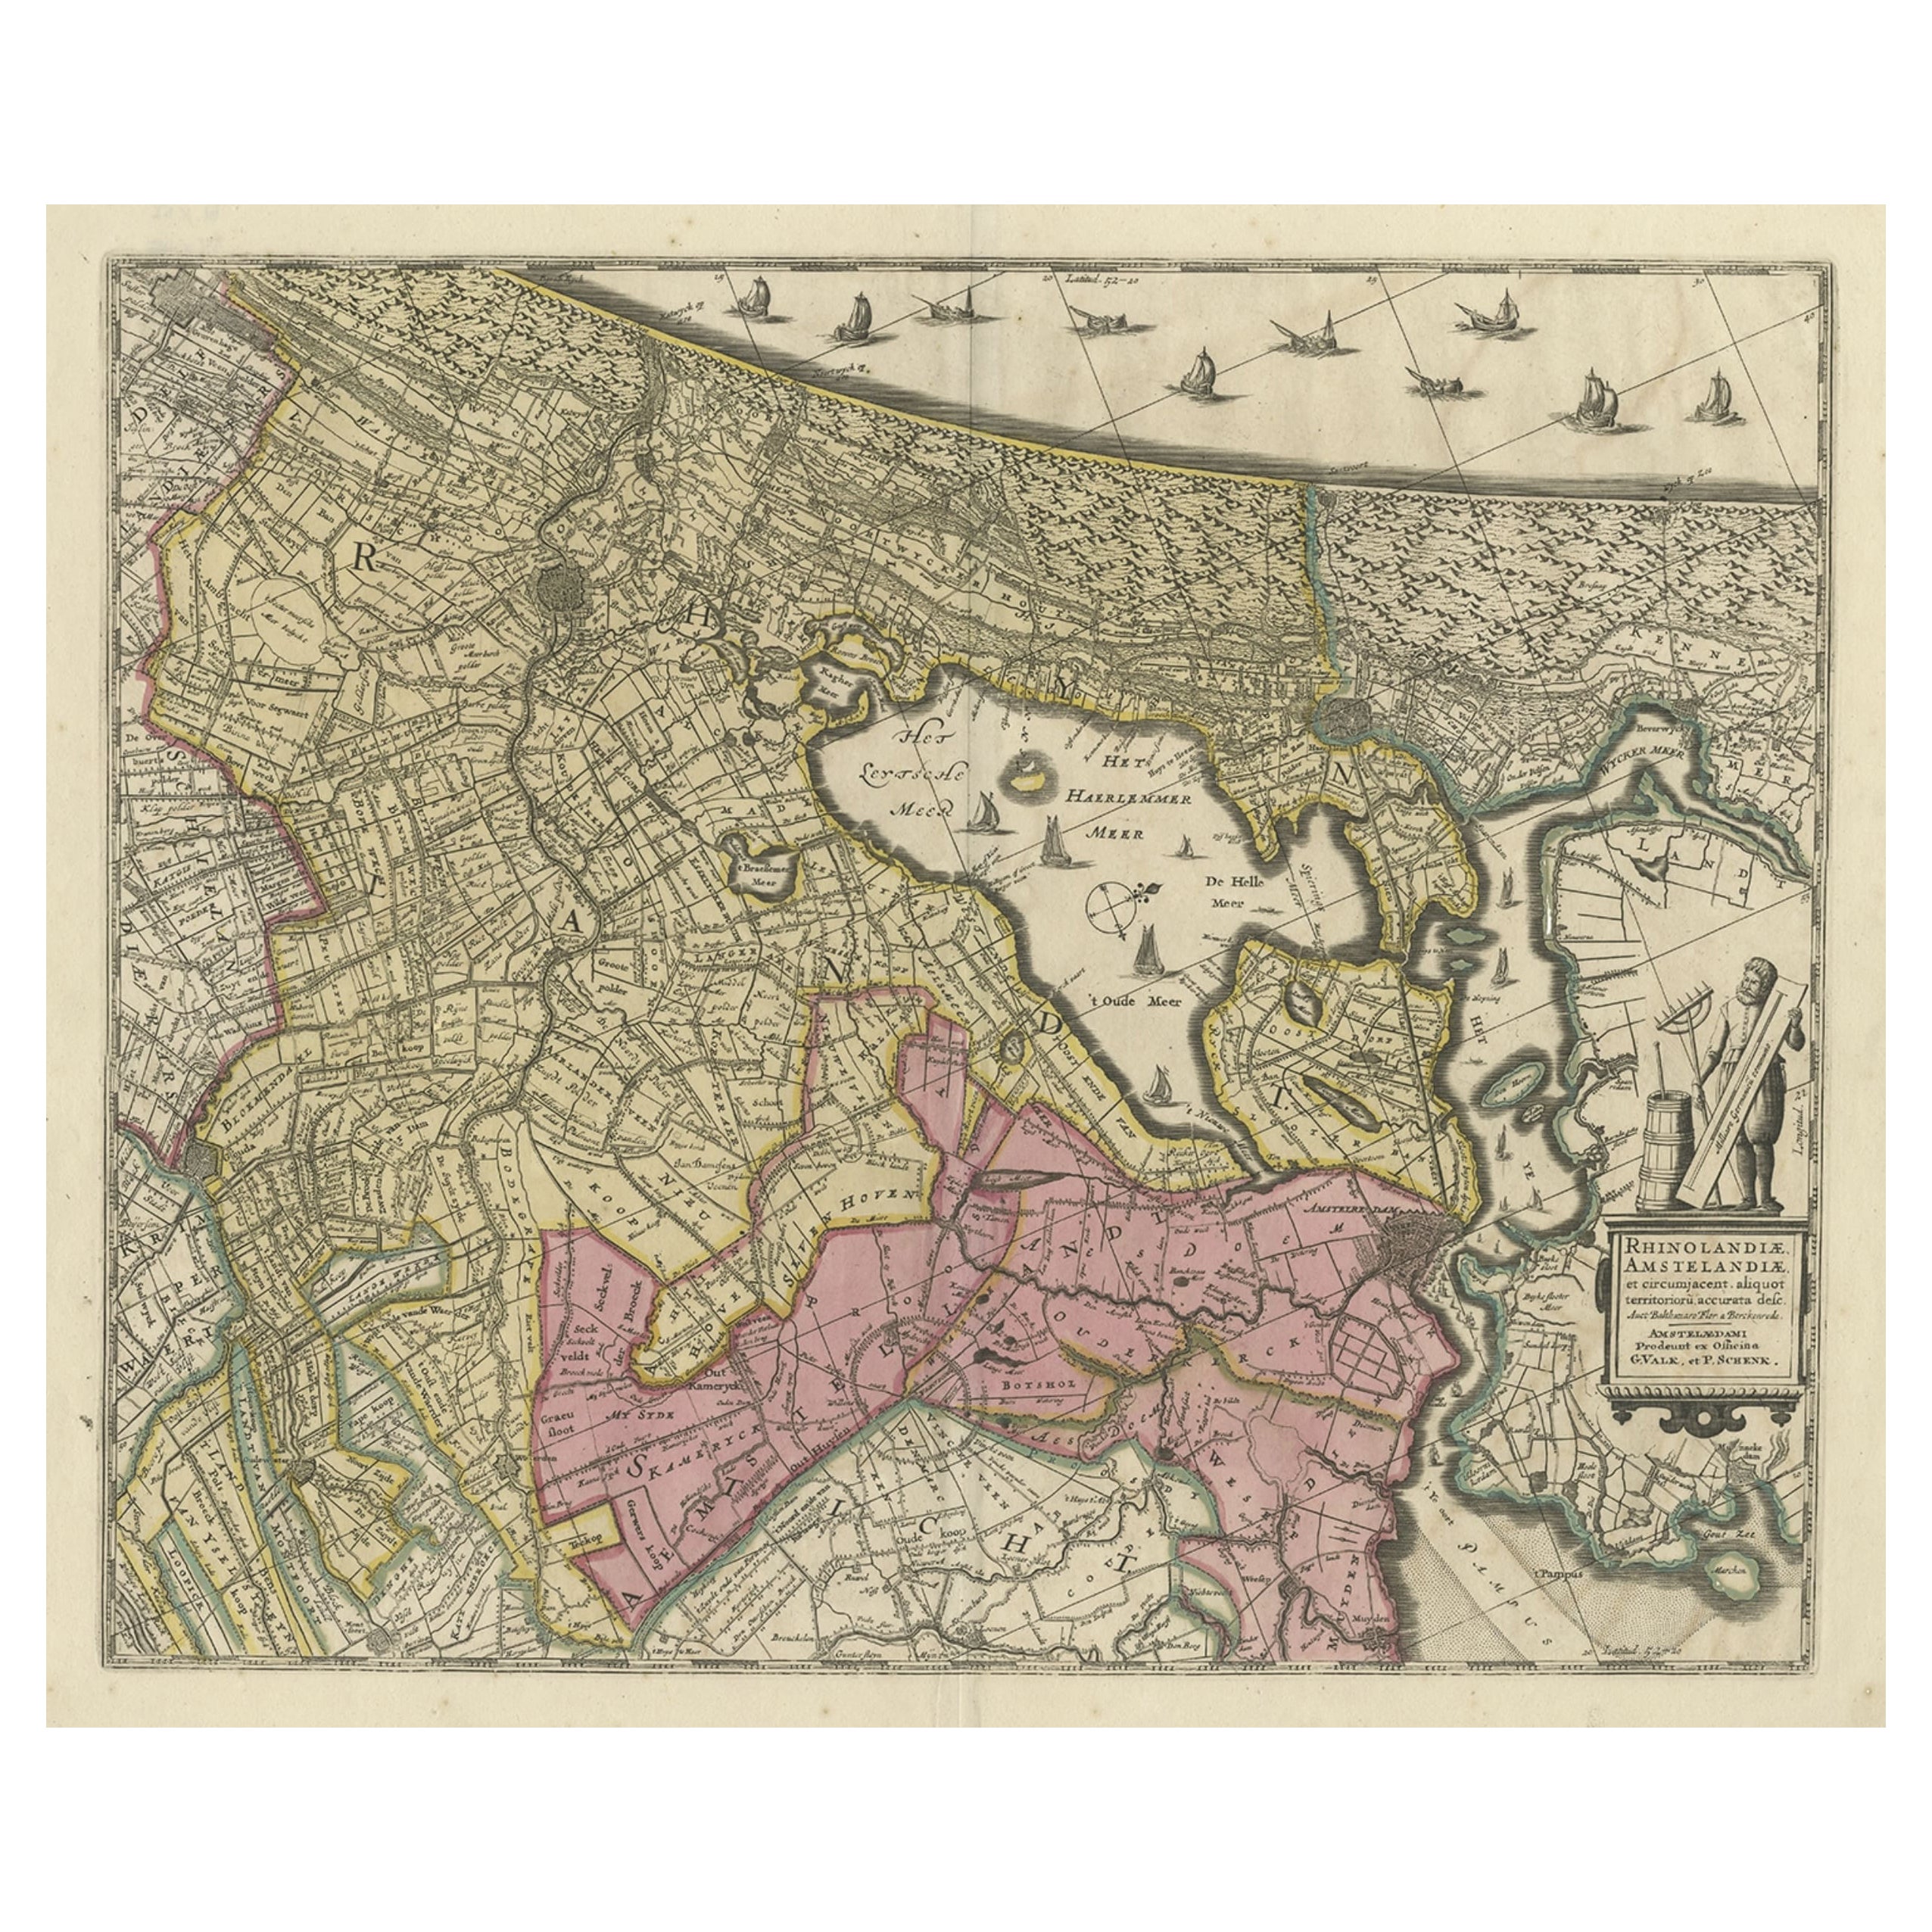 Original Antique Map of the Netherlands Incl Amsterdam, Leiden and Haarlem, 1700